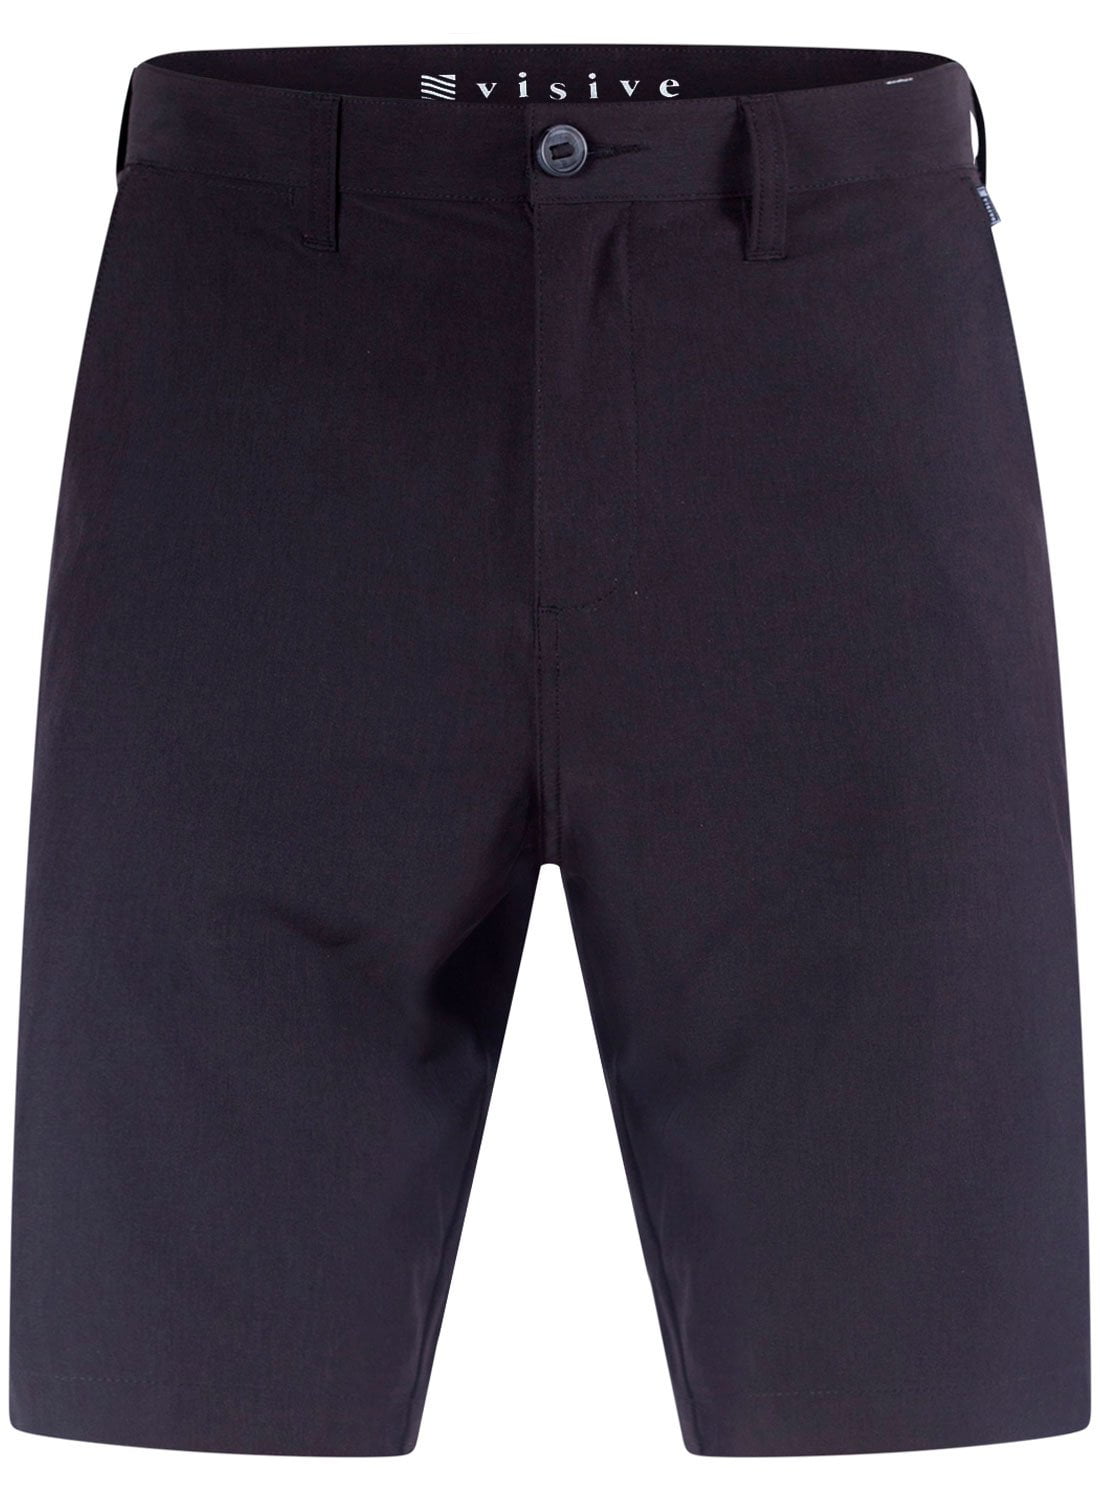 Visive Mens Hybrid Quick Dry Board Shorts/Walk Short Size 30-44 